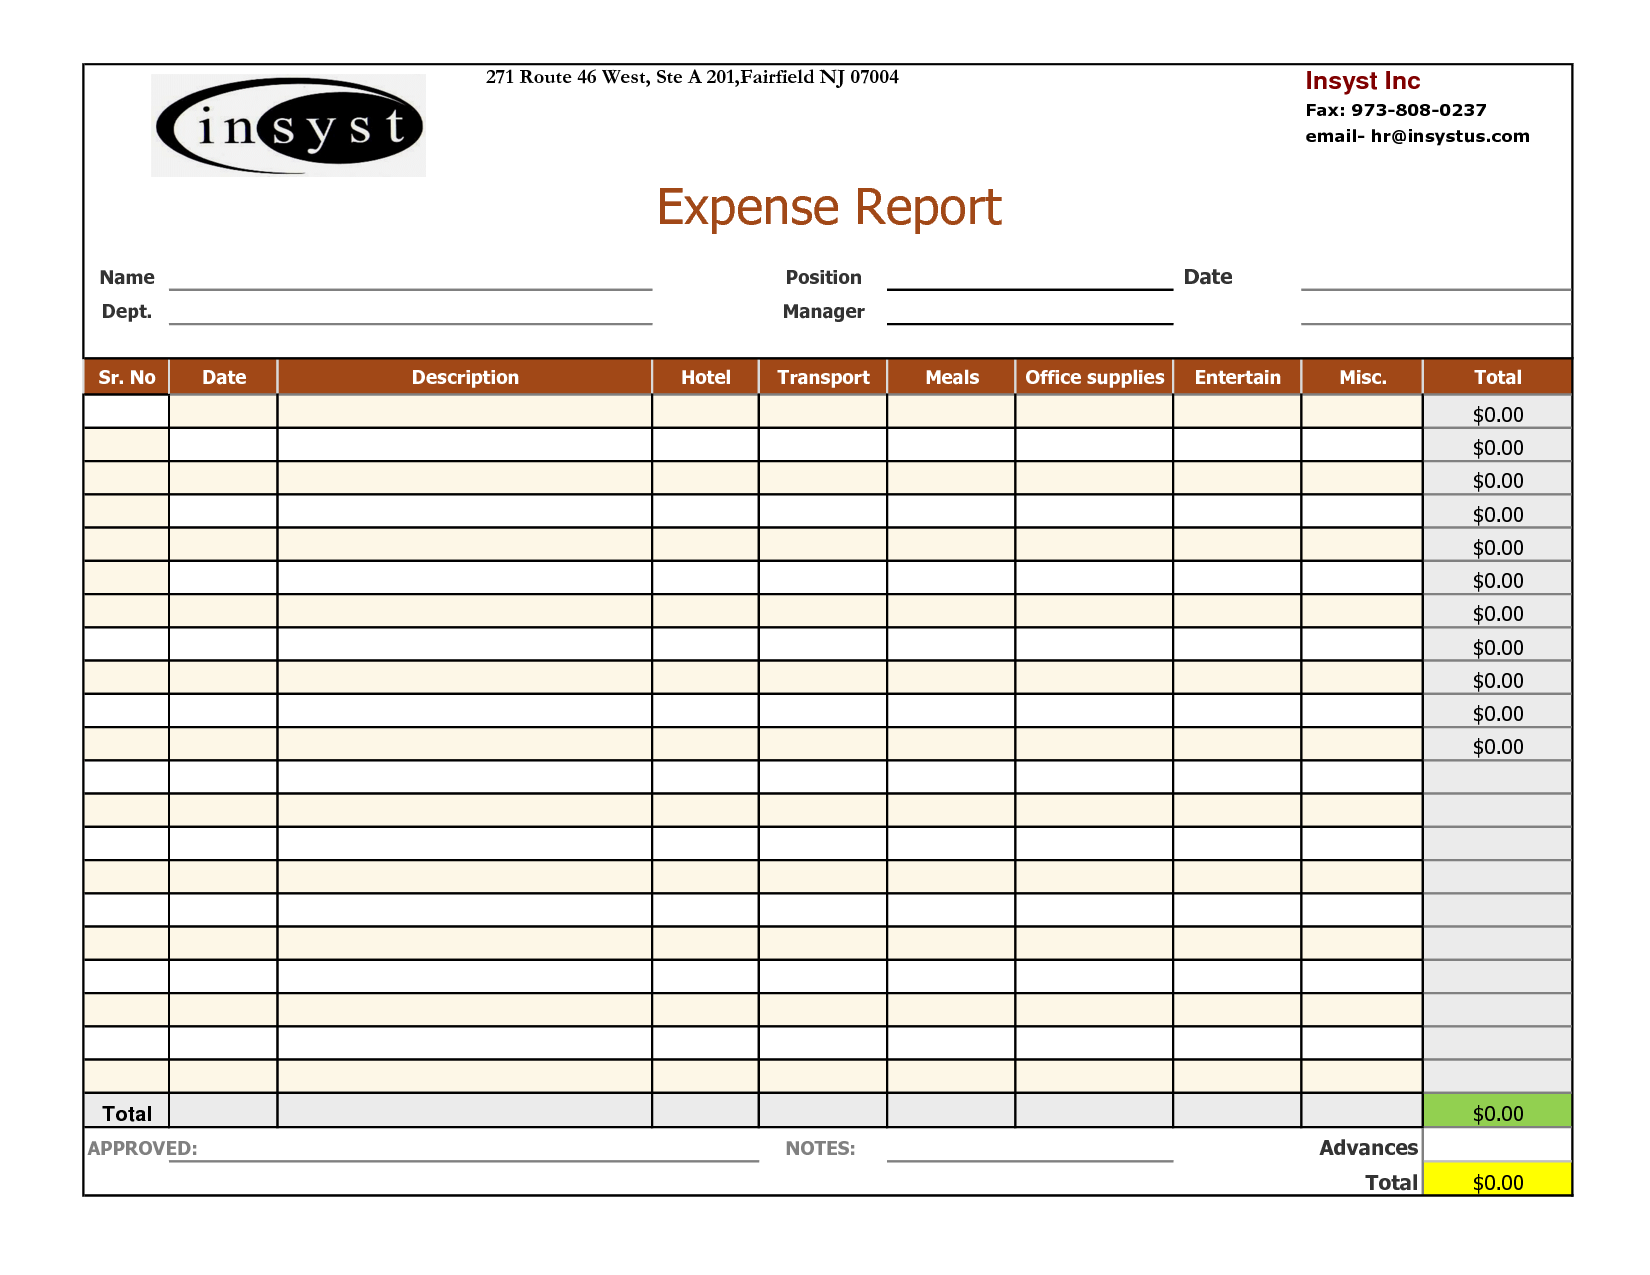 Expense Report Template Google Docs 1